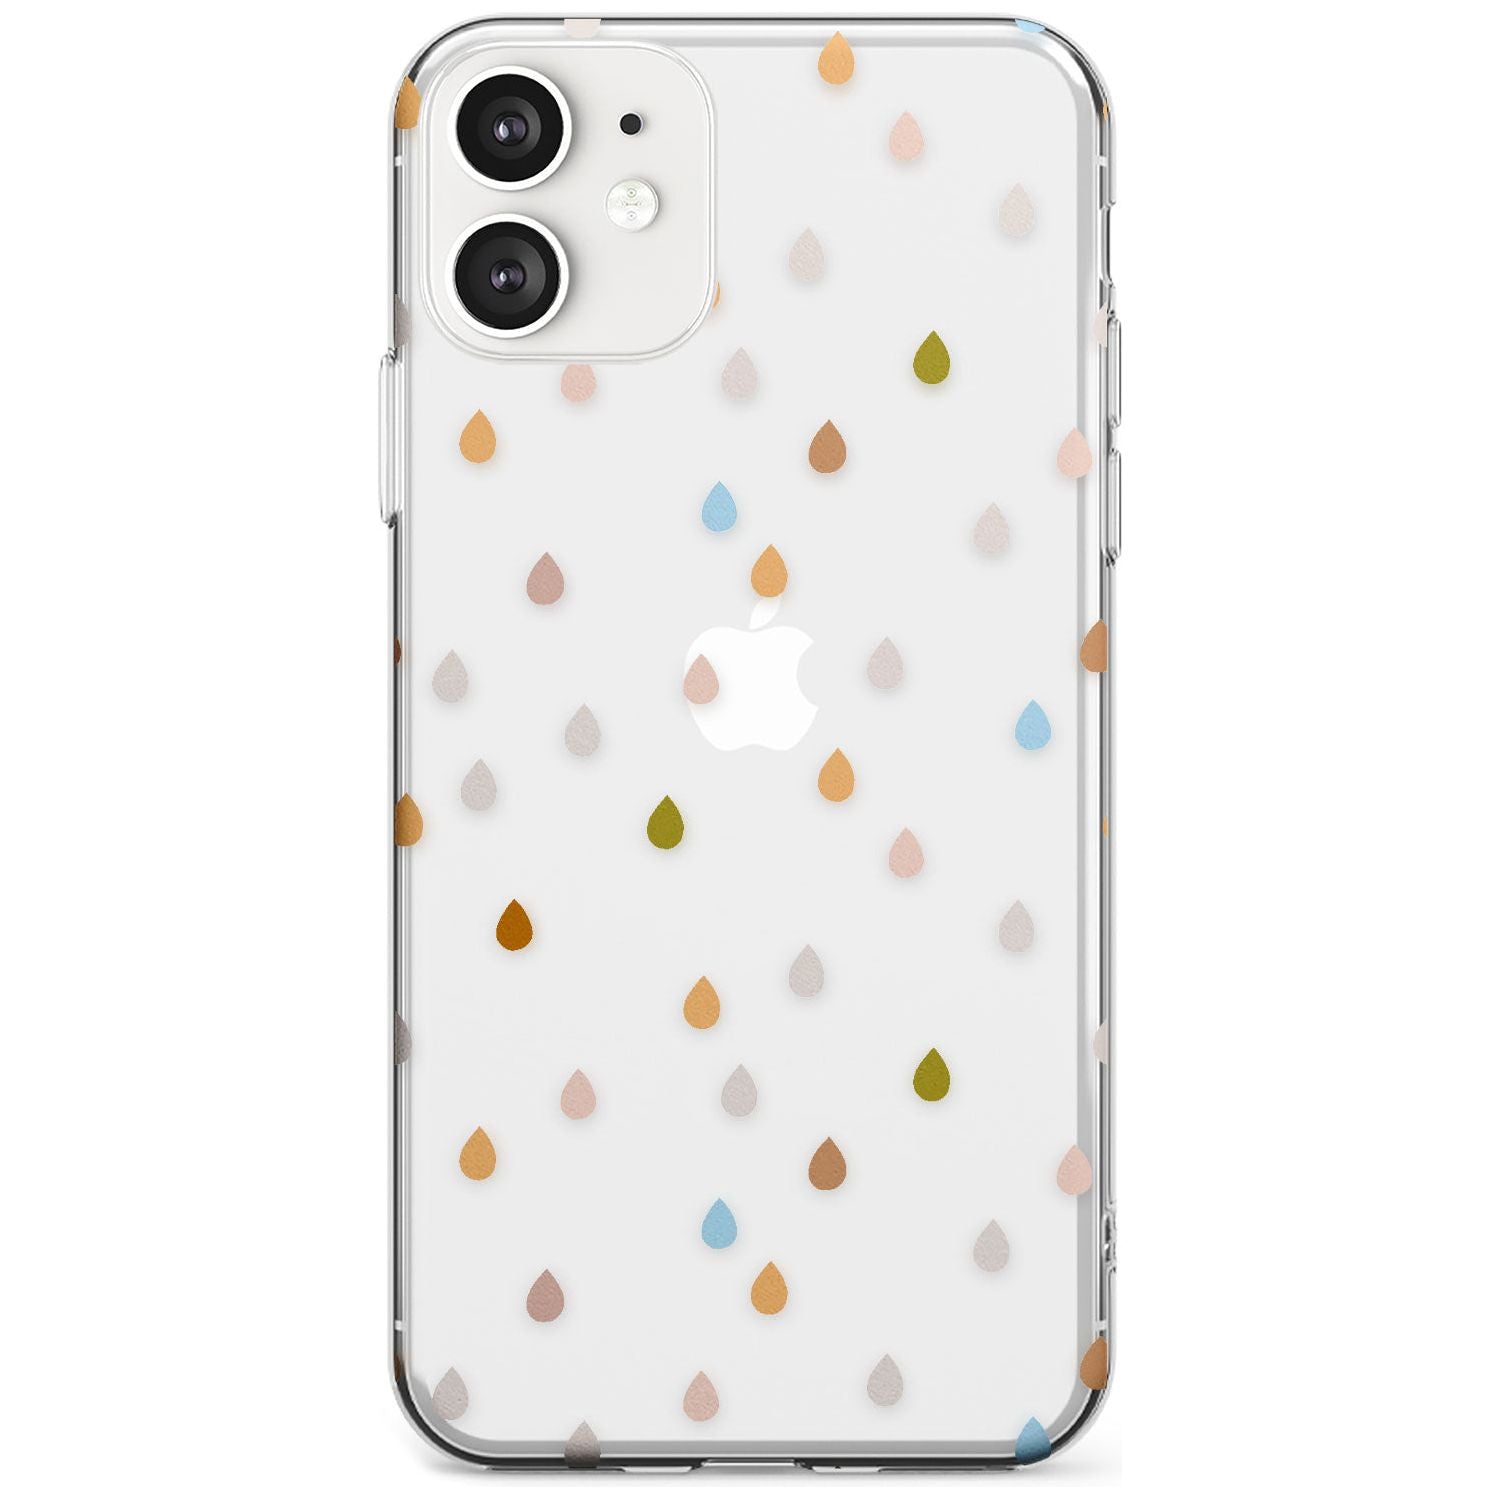 Raindrops Black Impact Phone Case for iPhone 11